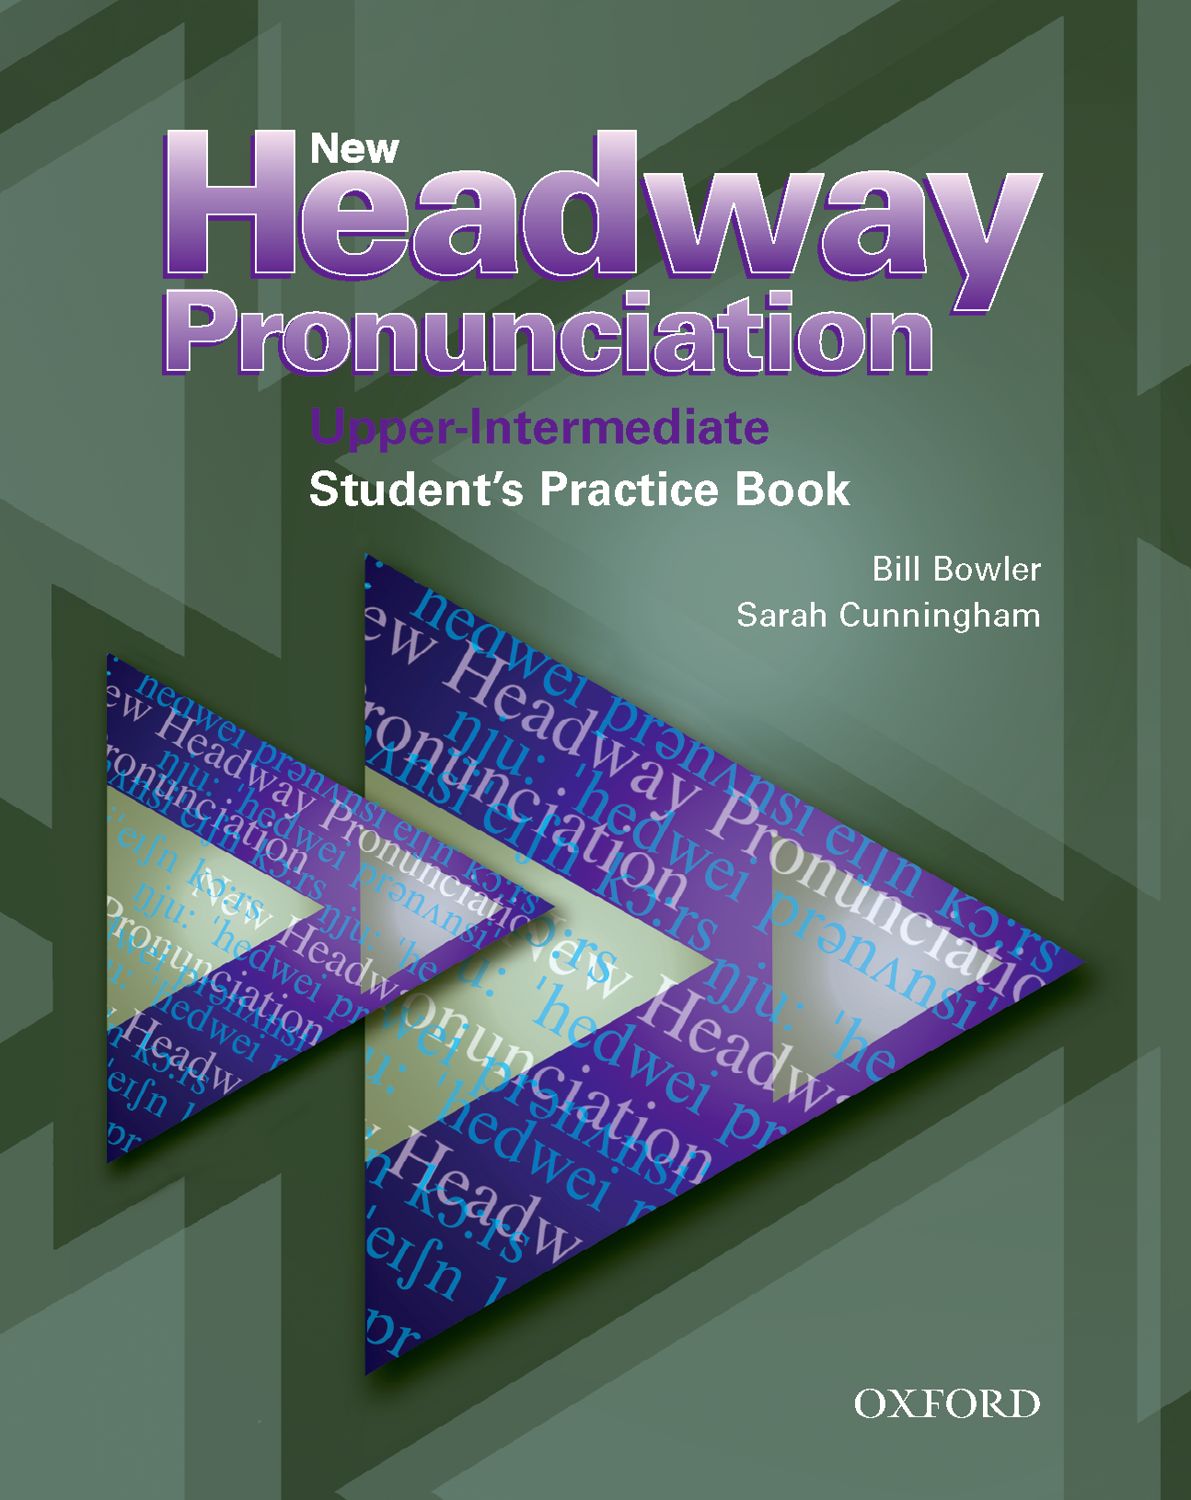 New headway upper intermediate. New Headway pronunciation course -Intermediate ,Oxford. New Headway Intermediate. New Headway pronunciation course.